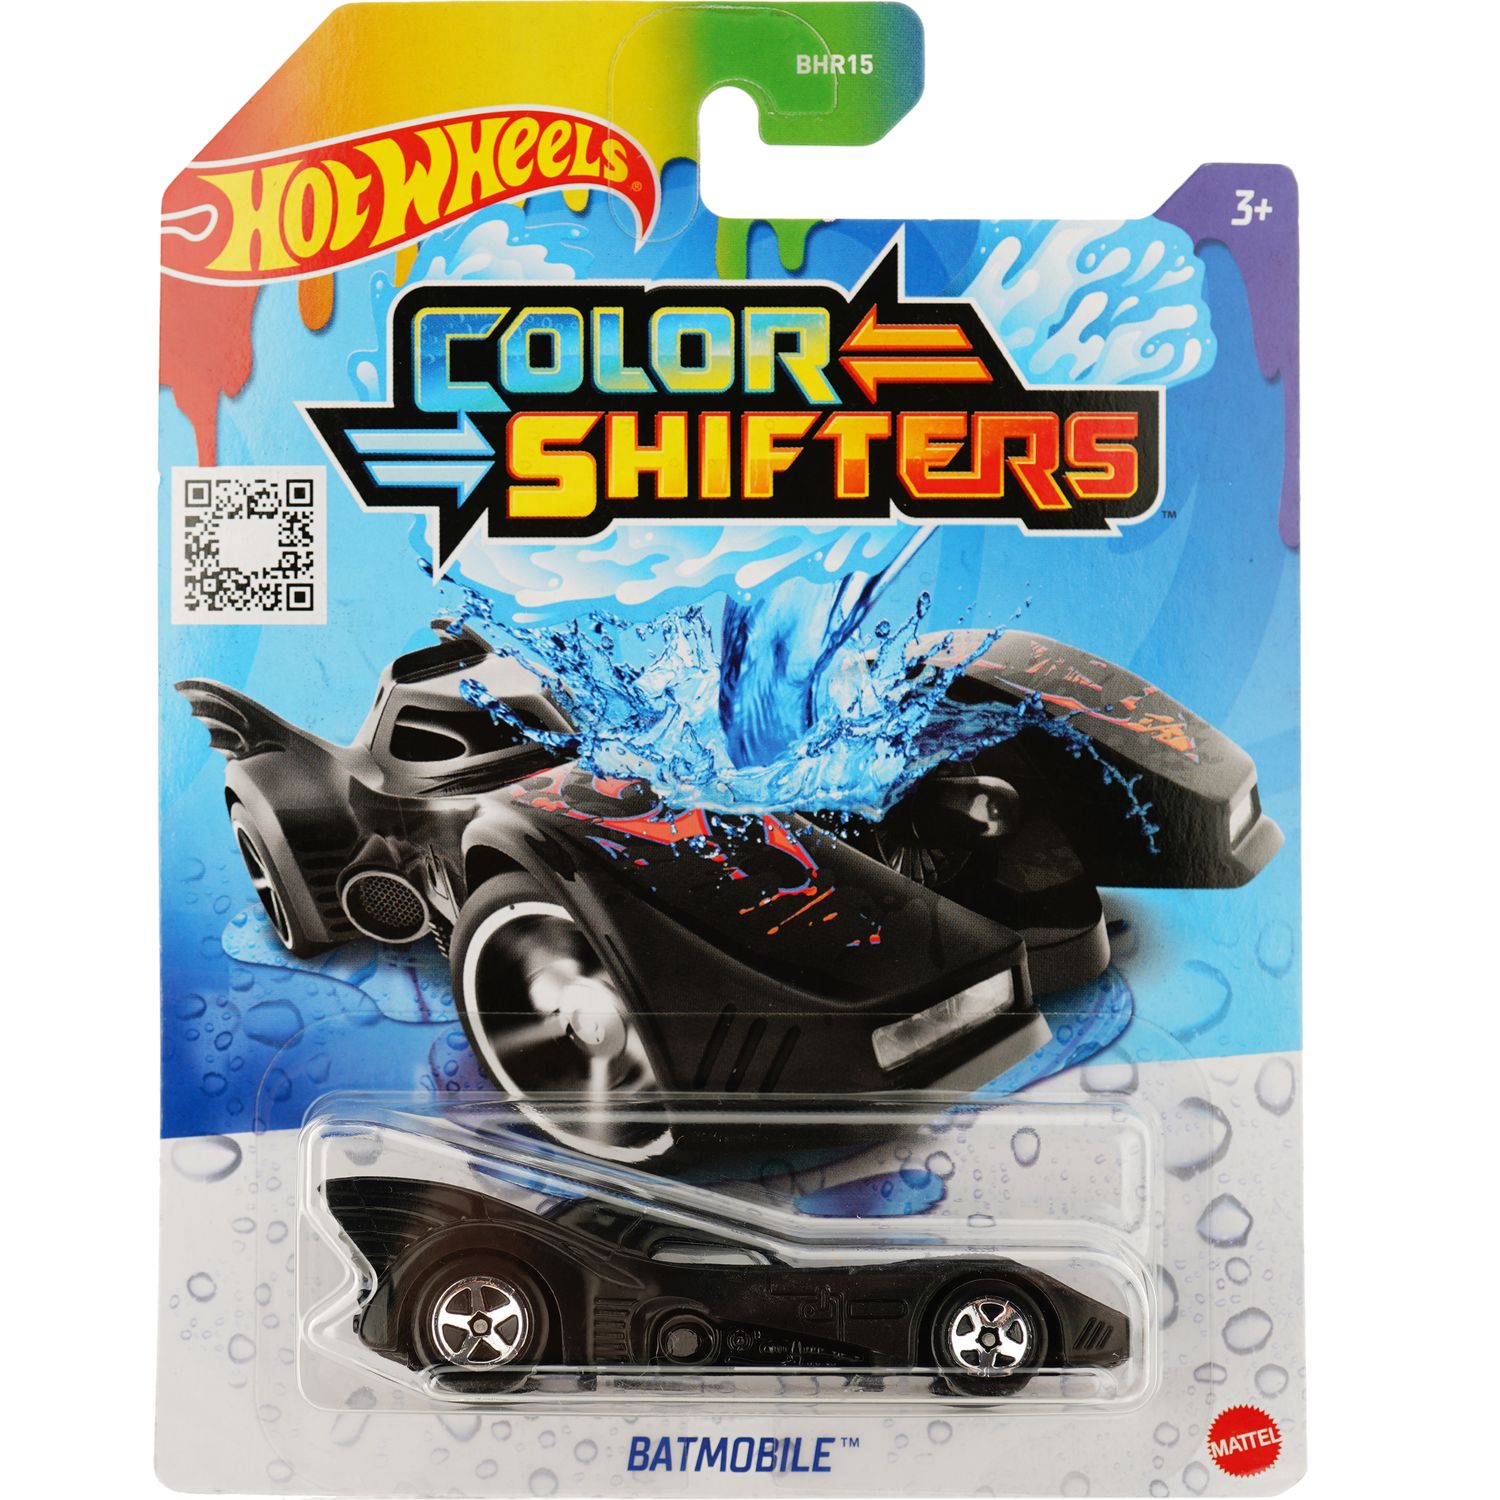 Машинка Hot Wheels Изменения цвета Batmobile (BHR15) - фото 1